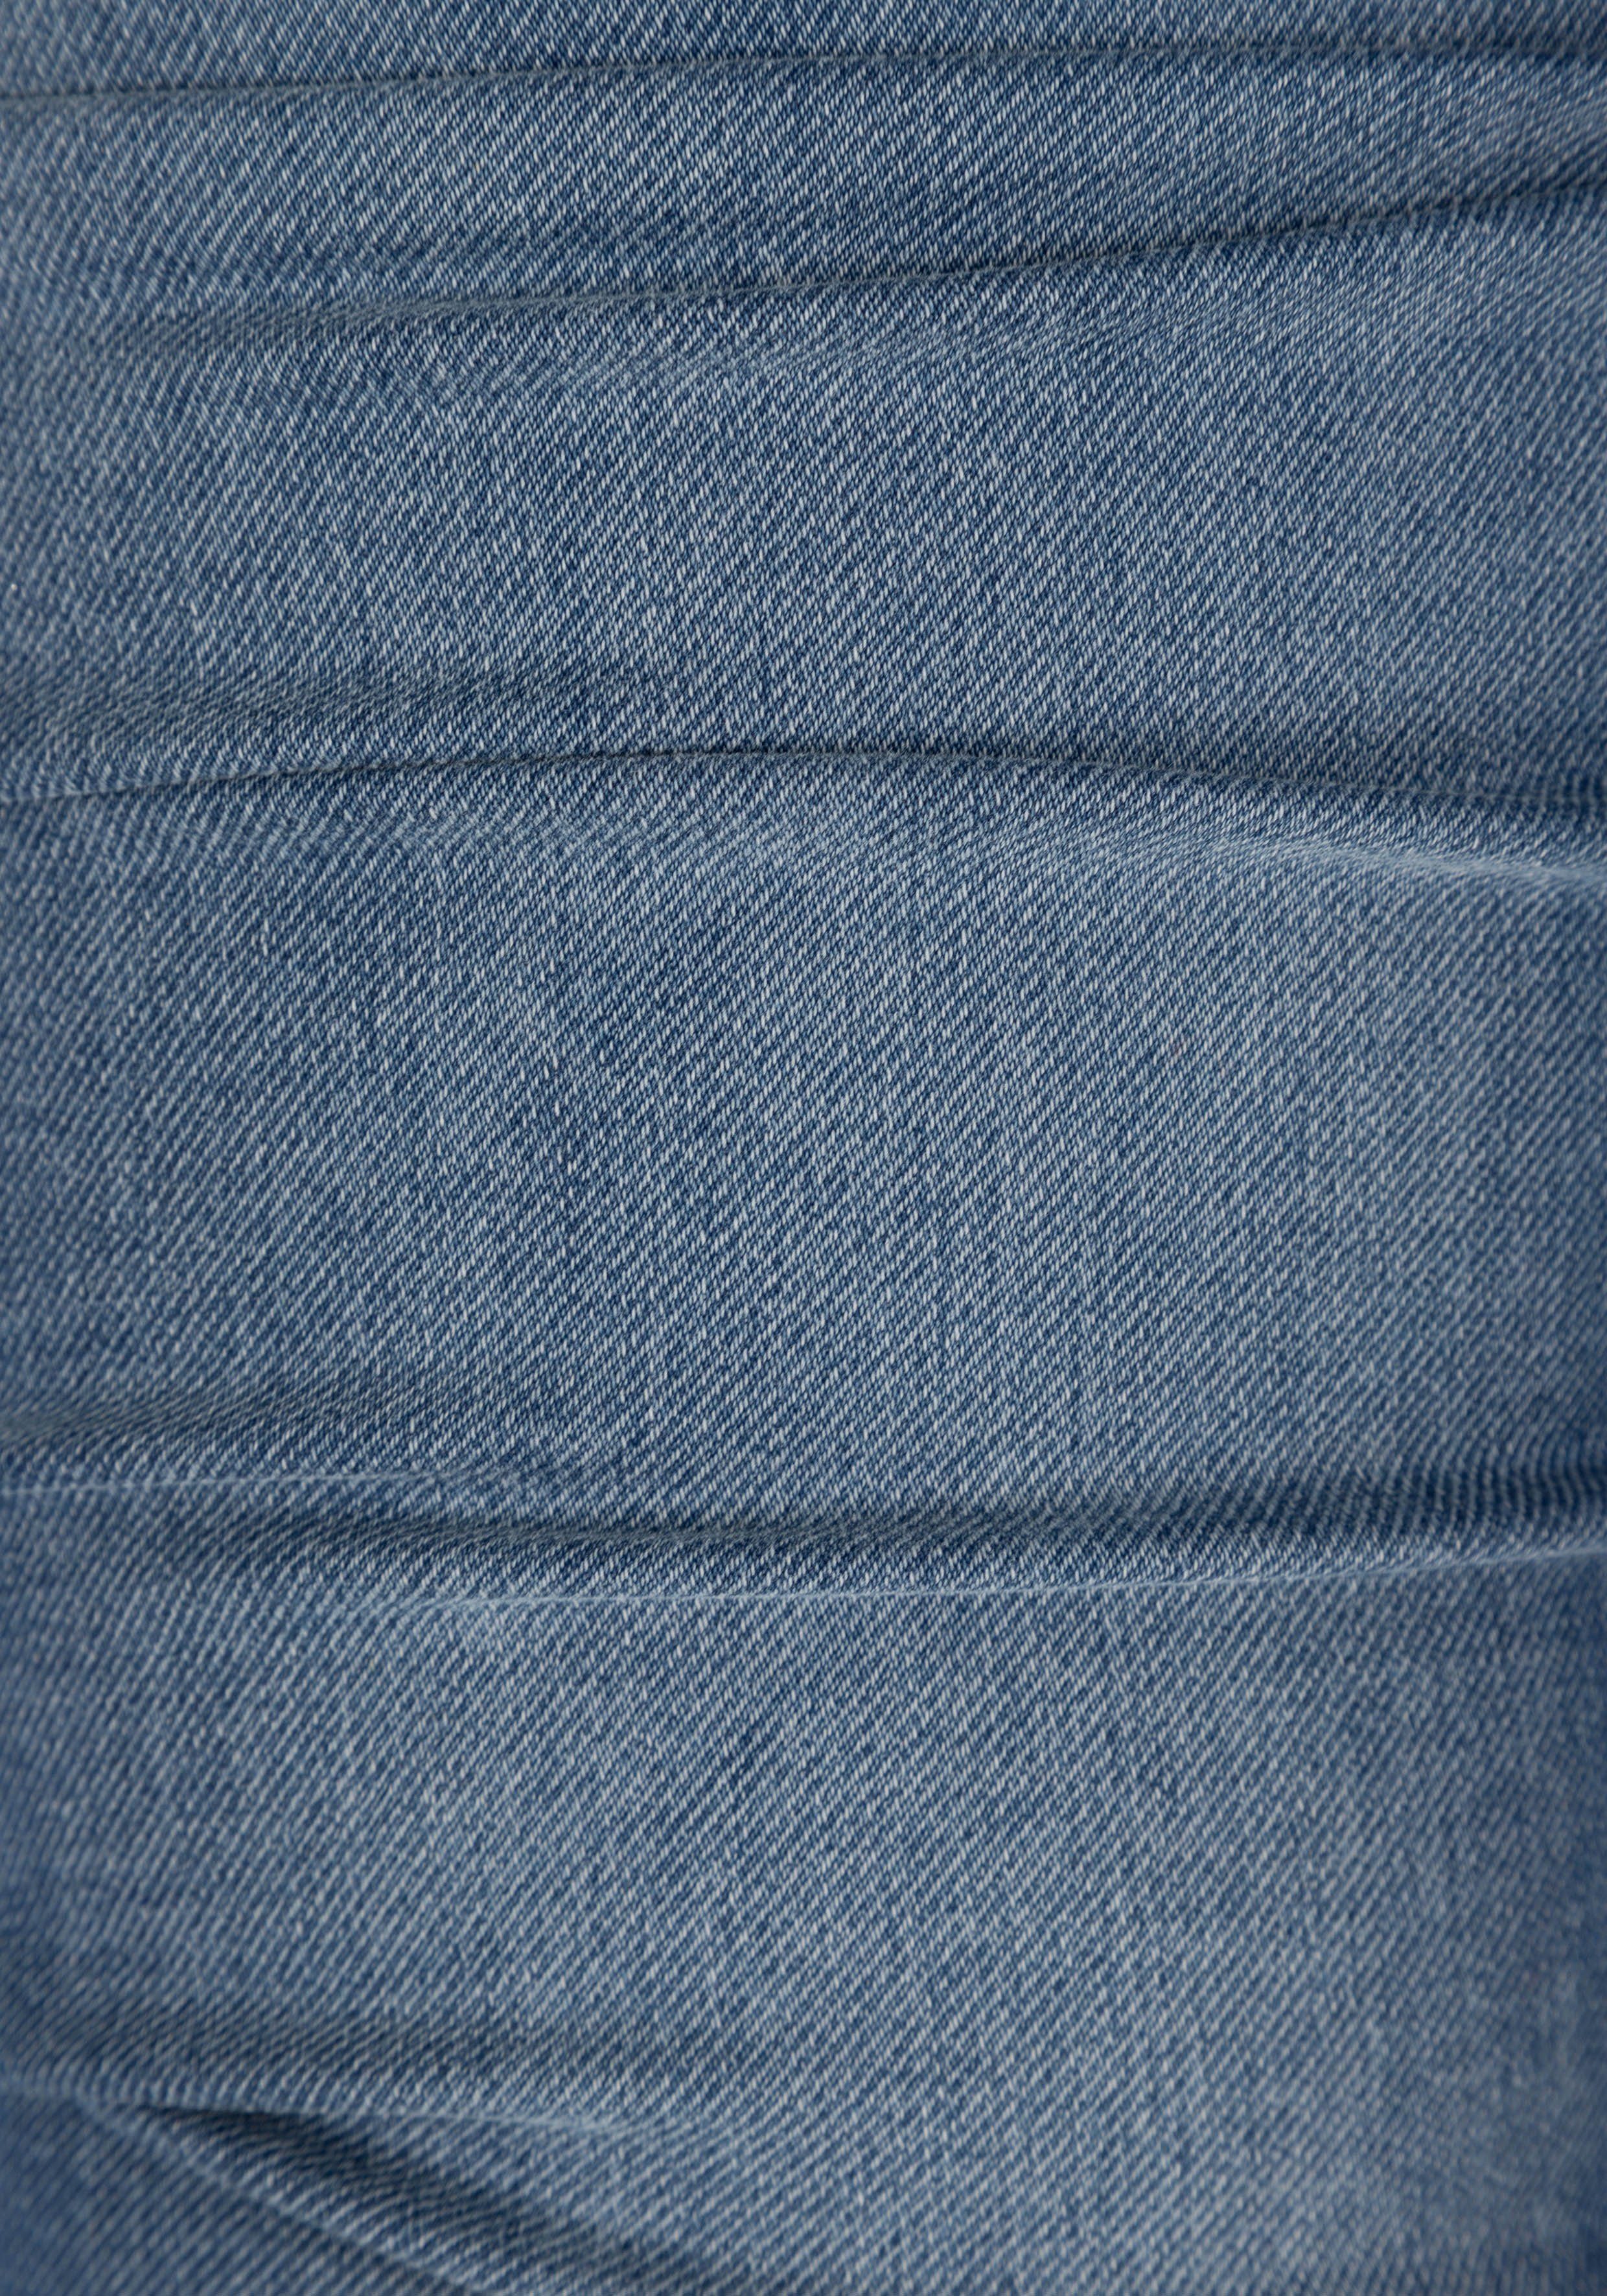 Jogg 5-Pocket-Jeans blau TIMEZONE Tight AleenaTZ